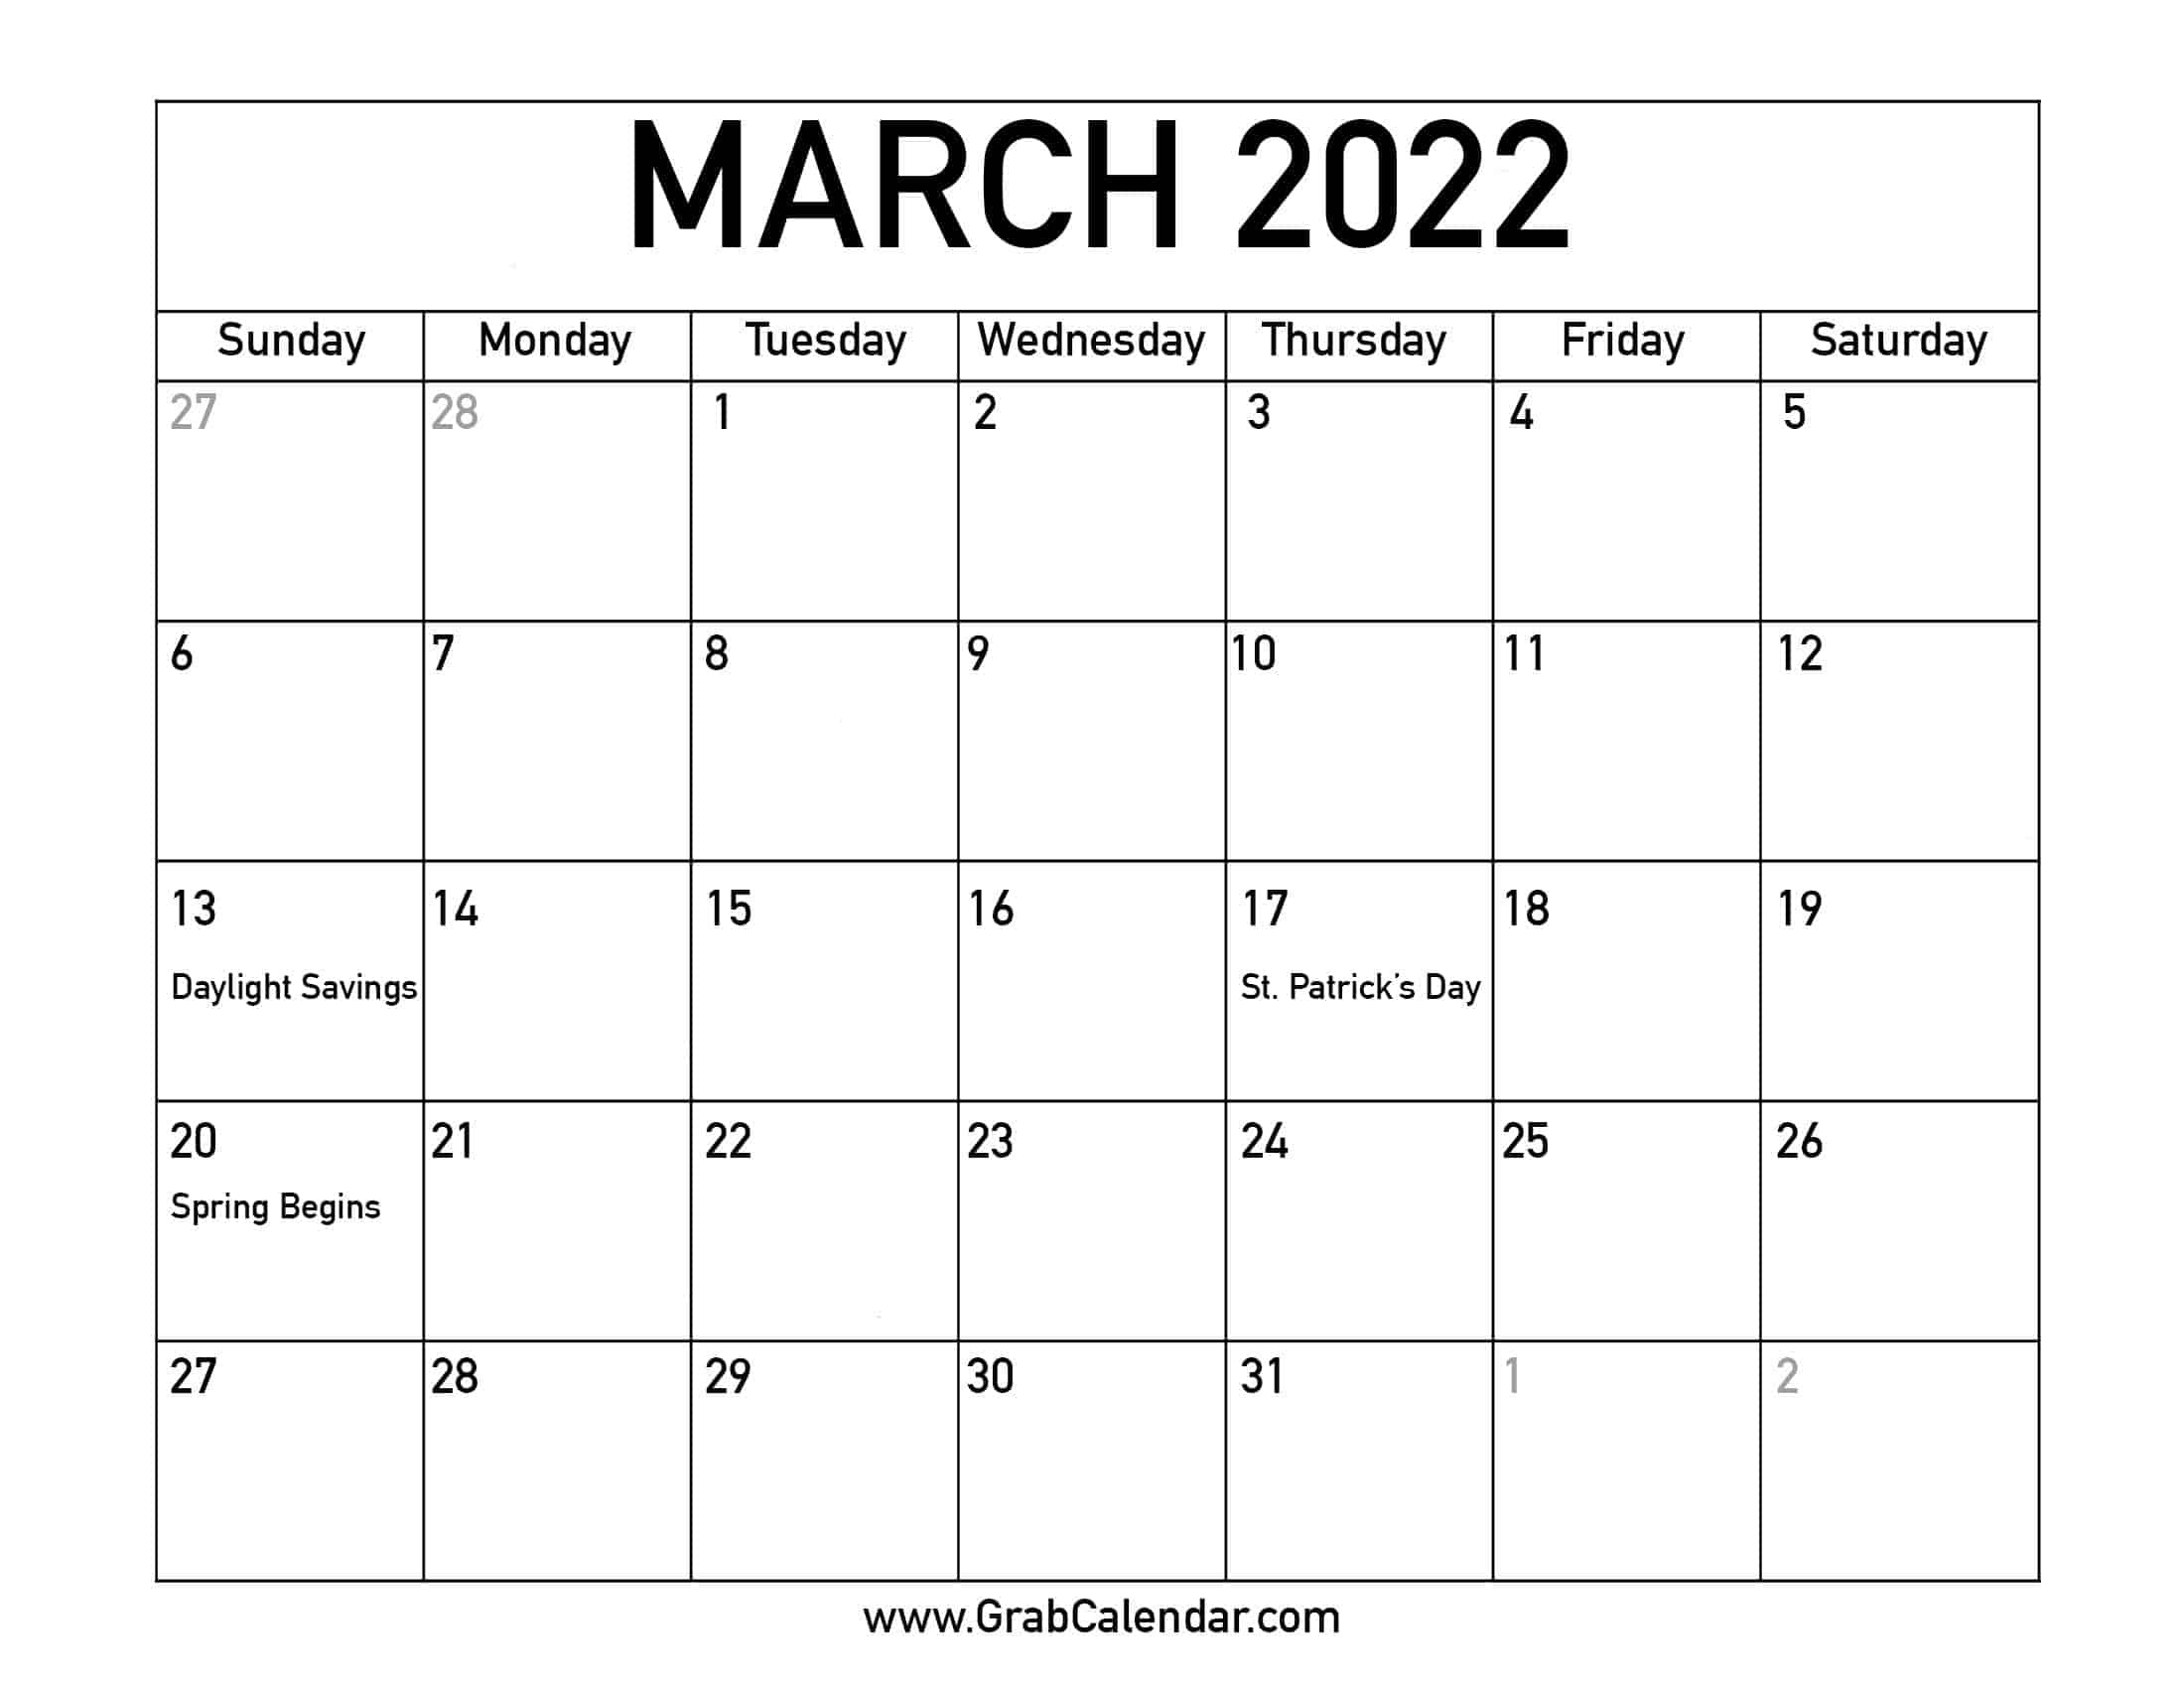 March 2022 Calendar With Holidays.Printable March 2022 Calendar